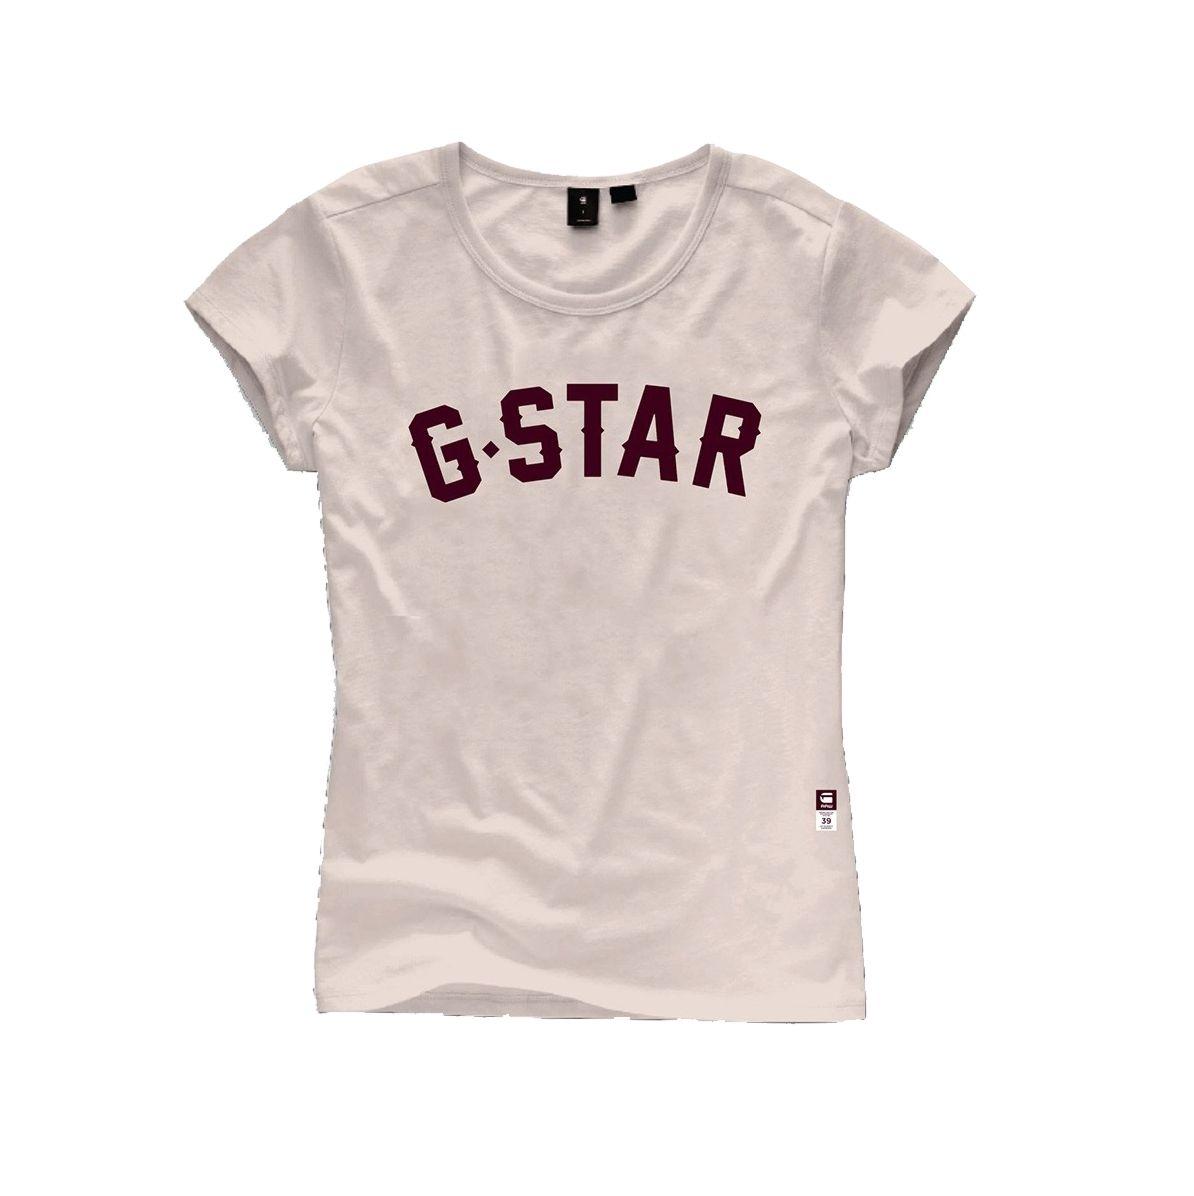 Star and White R Logo - G Star Raw Womens 15 R Logo S S T Shirt, PYG Pink